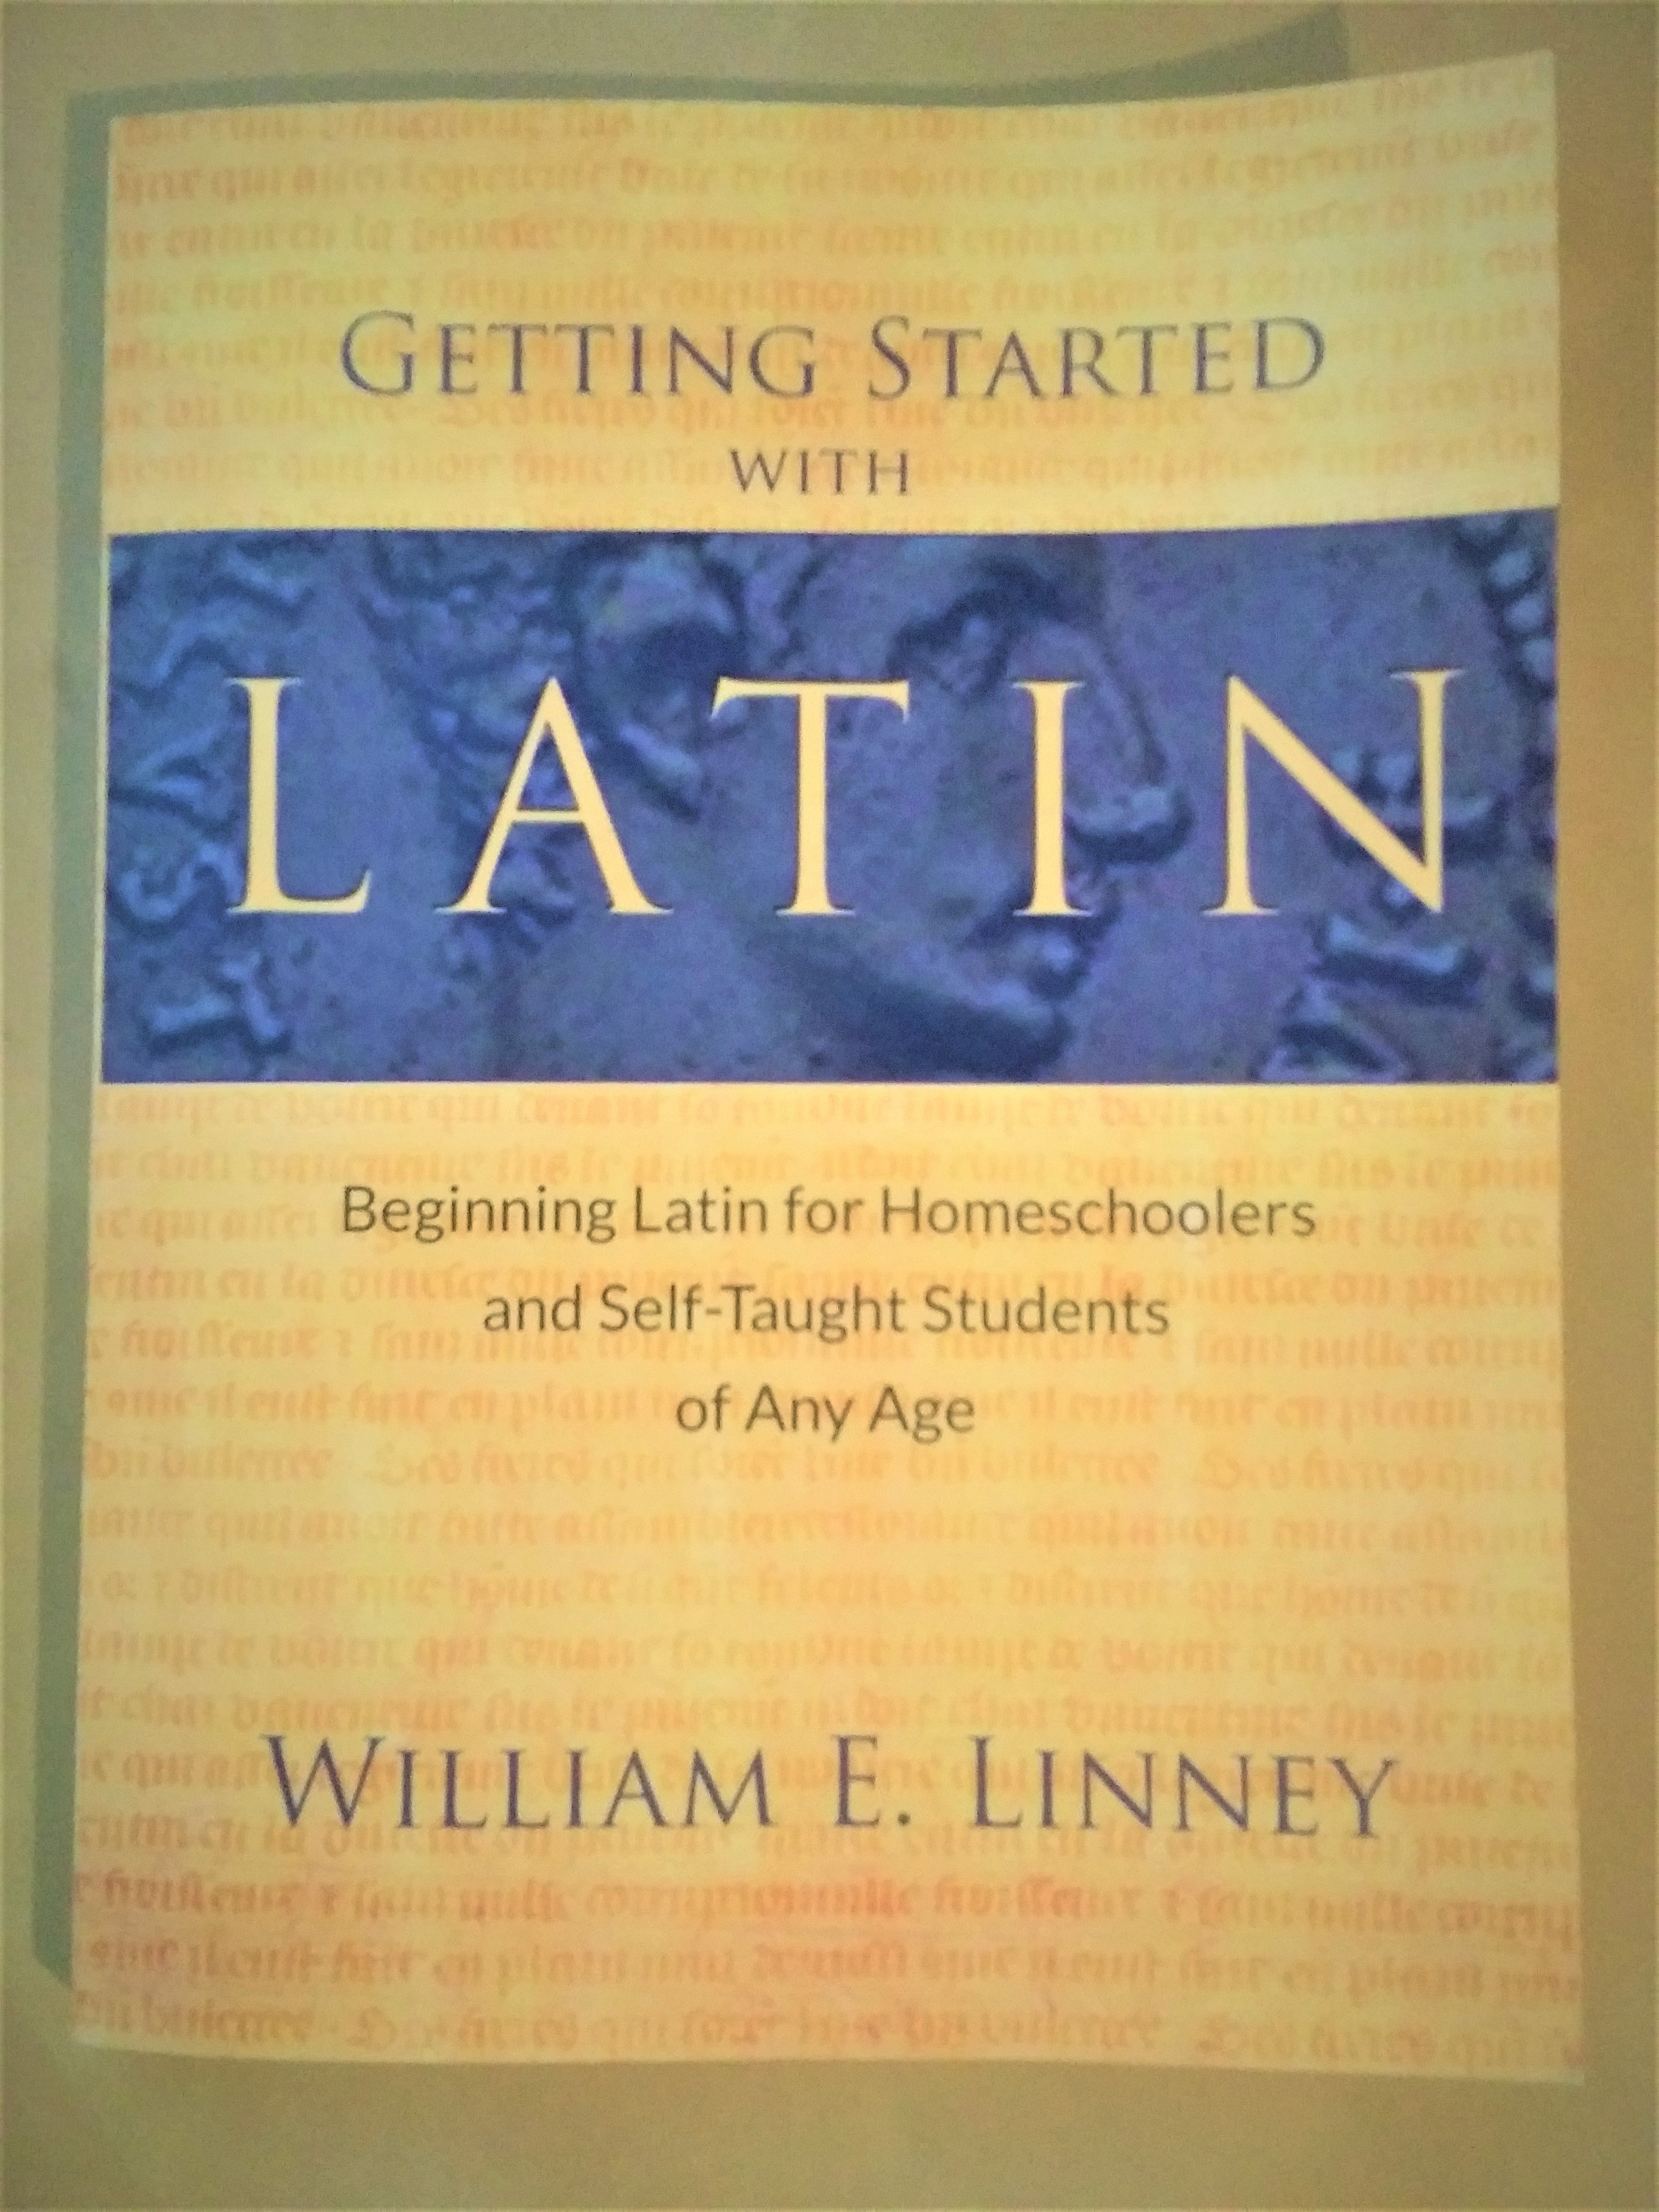 Latin Gets